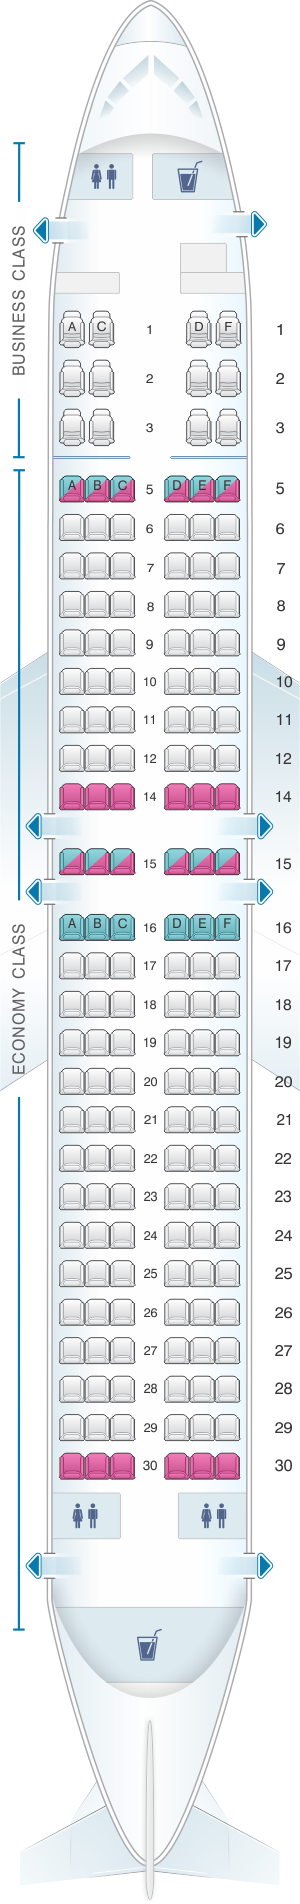 Plan de cabine SilkAir Boeing B737 800 | SeatMaestro.fr